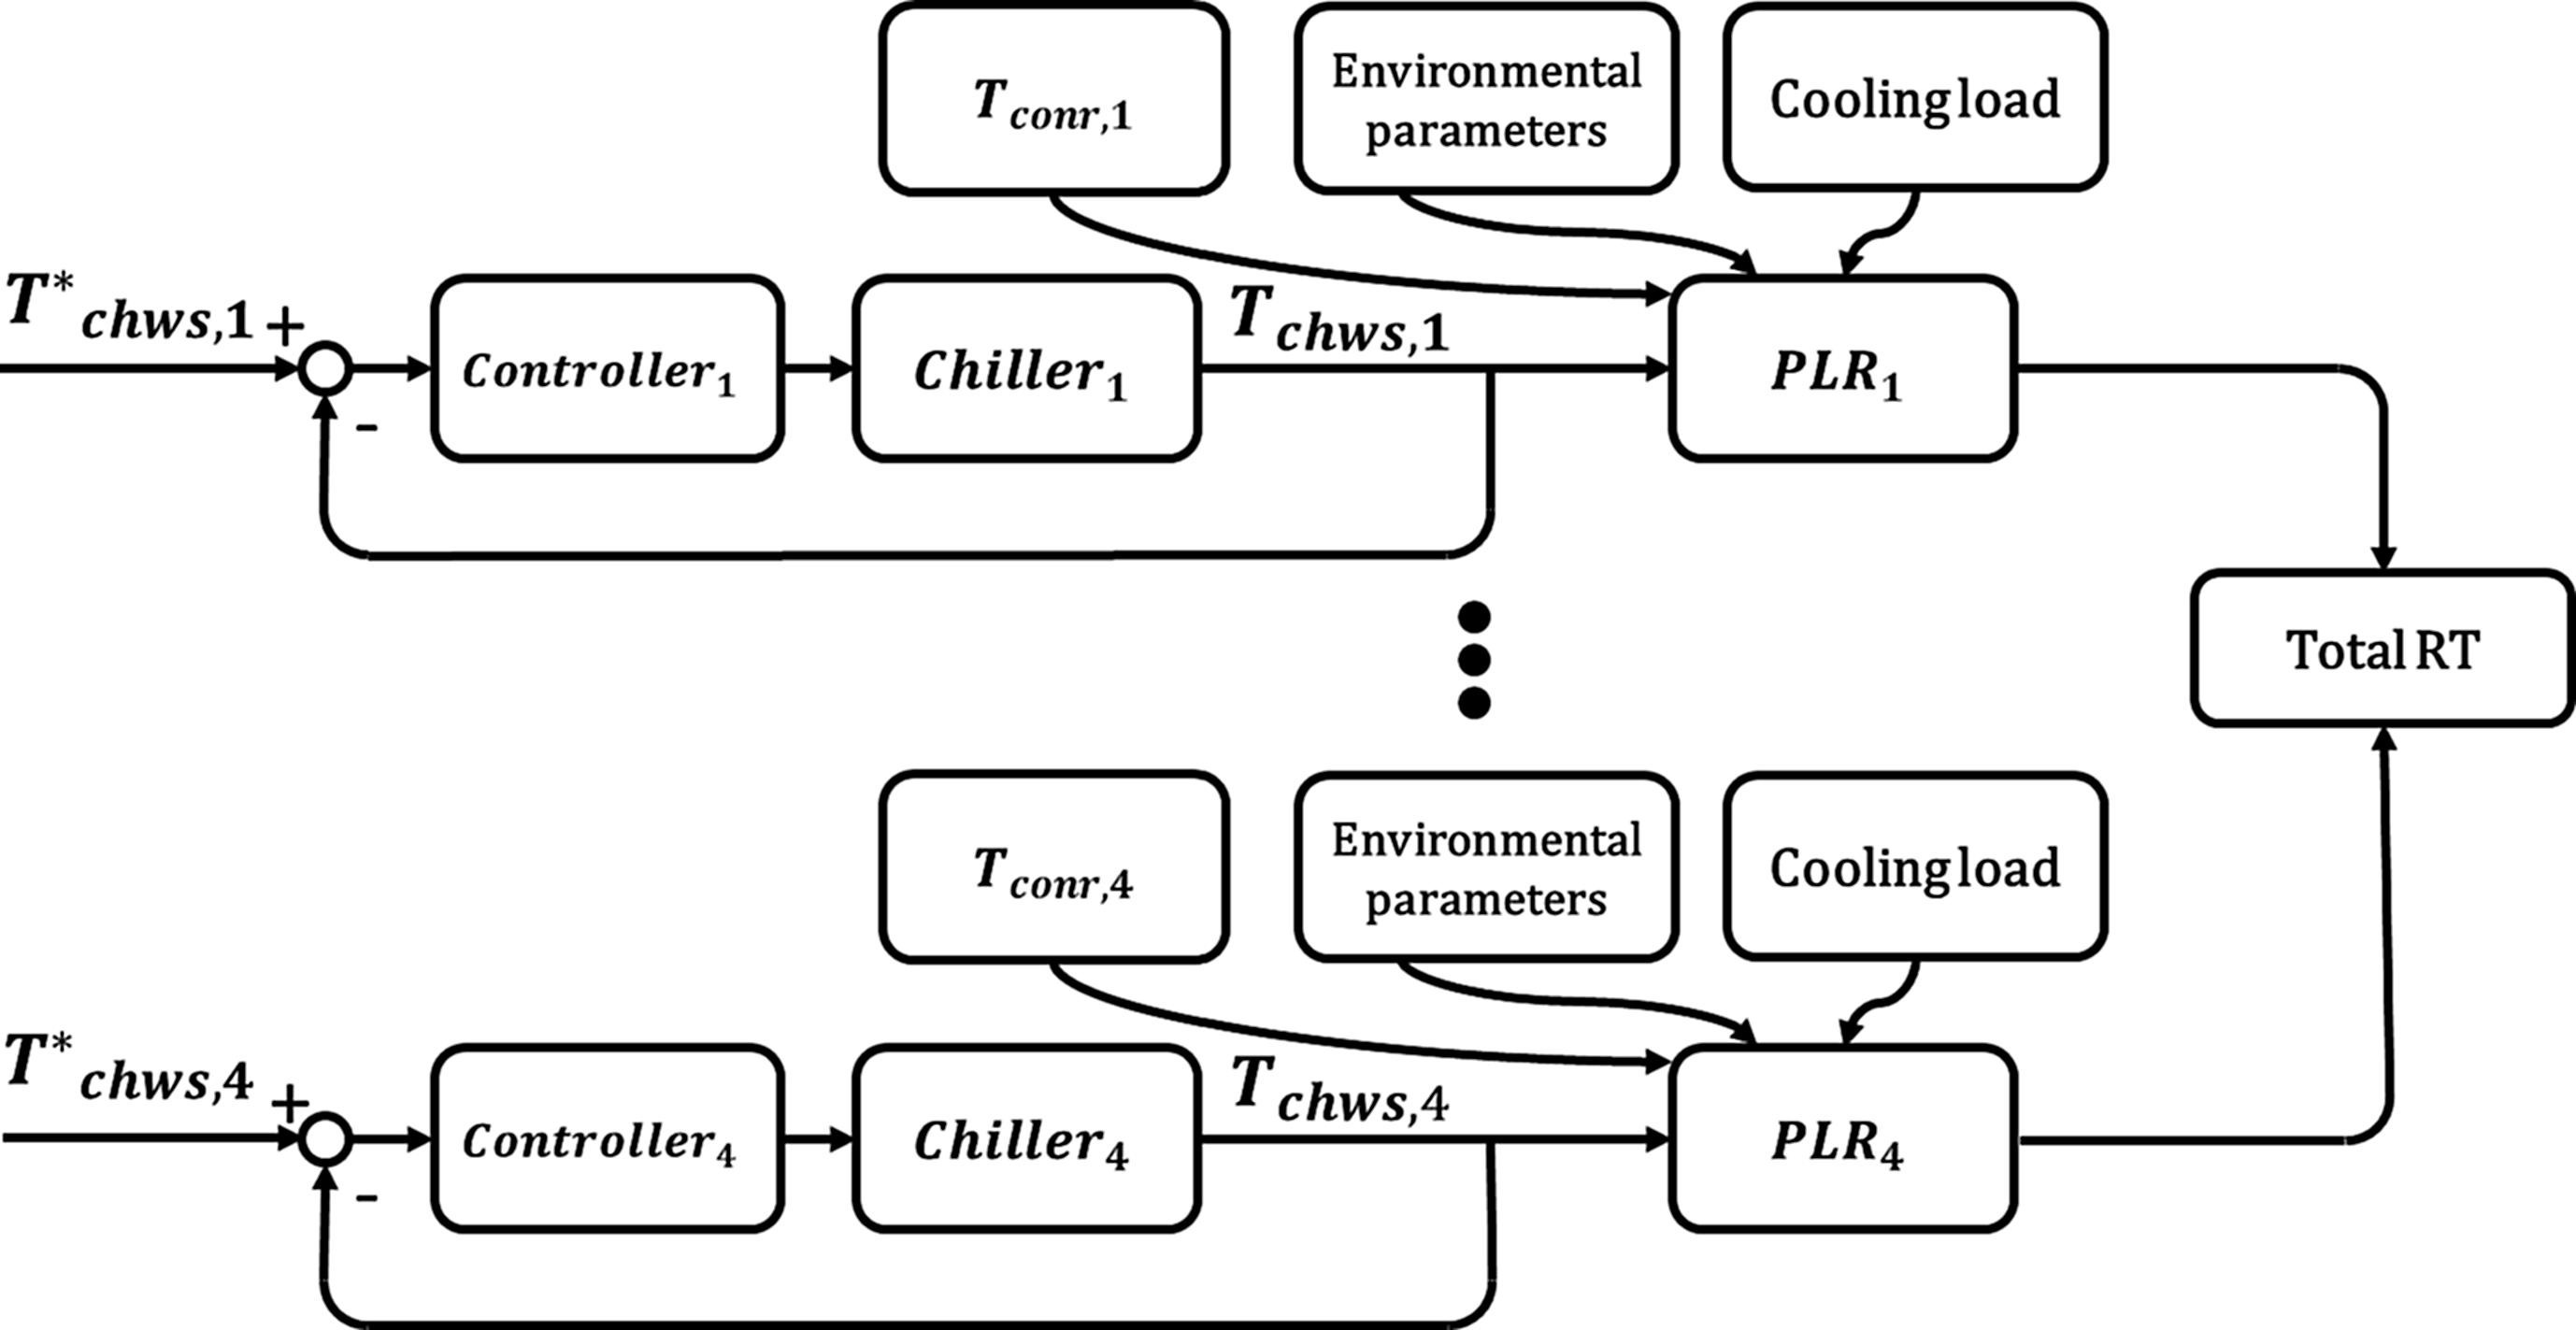 A novel data-driven optimal chiller loading regulator based on backward modeling approach